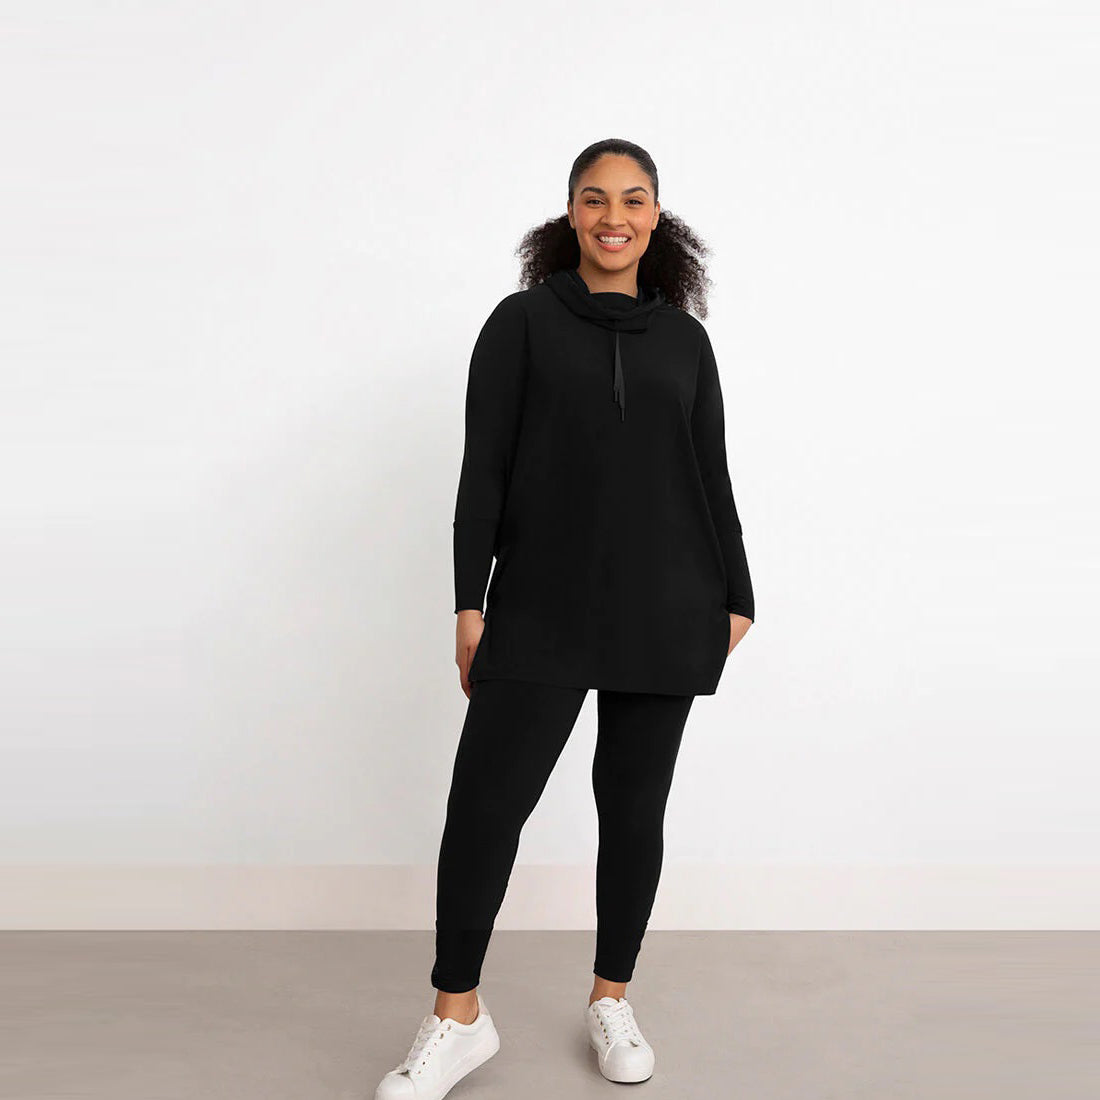 Crisscross Tunic, Long Sleeve, Black Sweater, Sympli Clothing, Canada